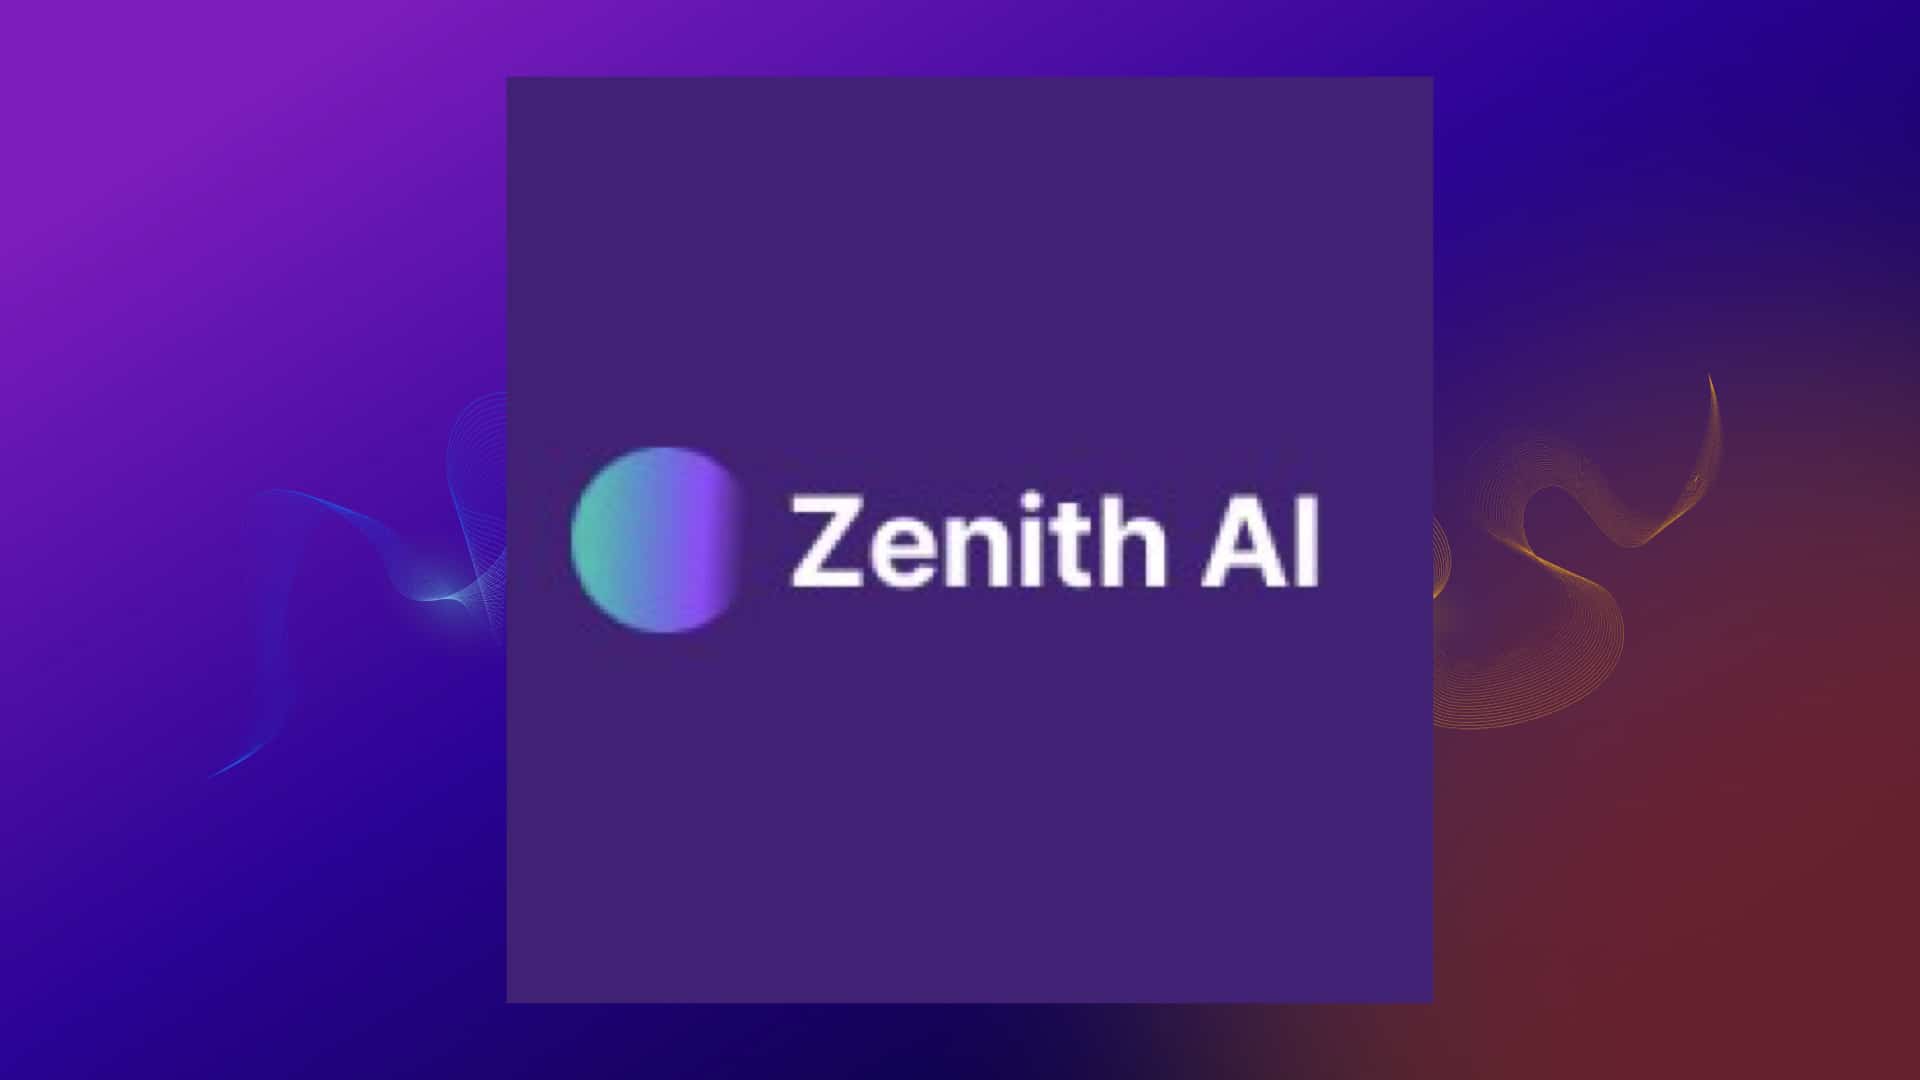 ZENITH AI